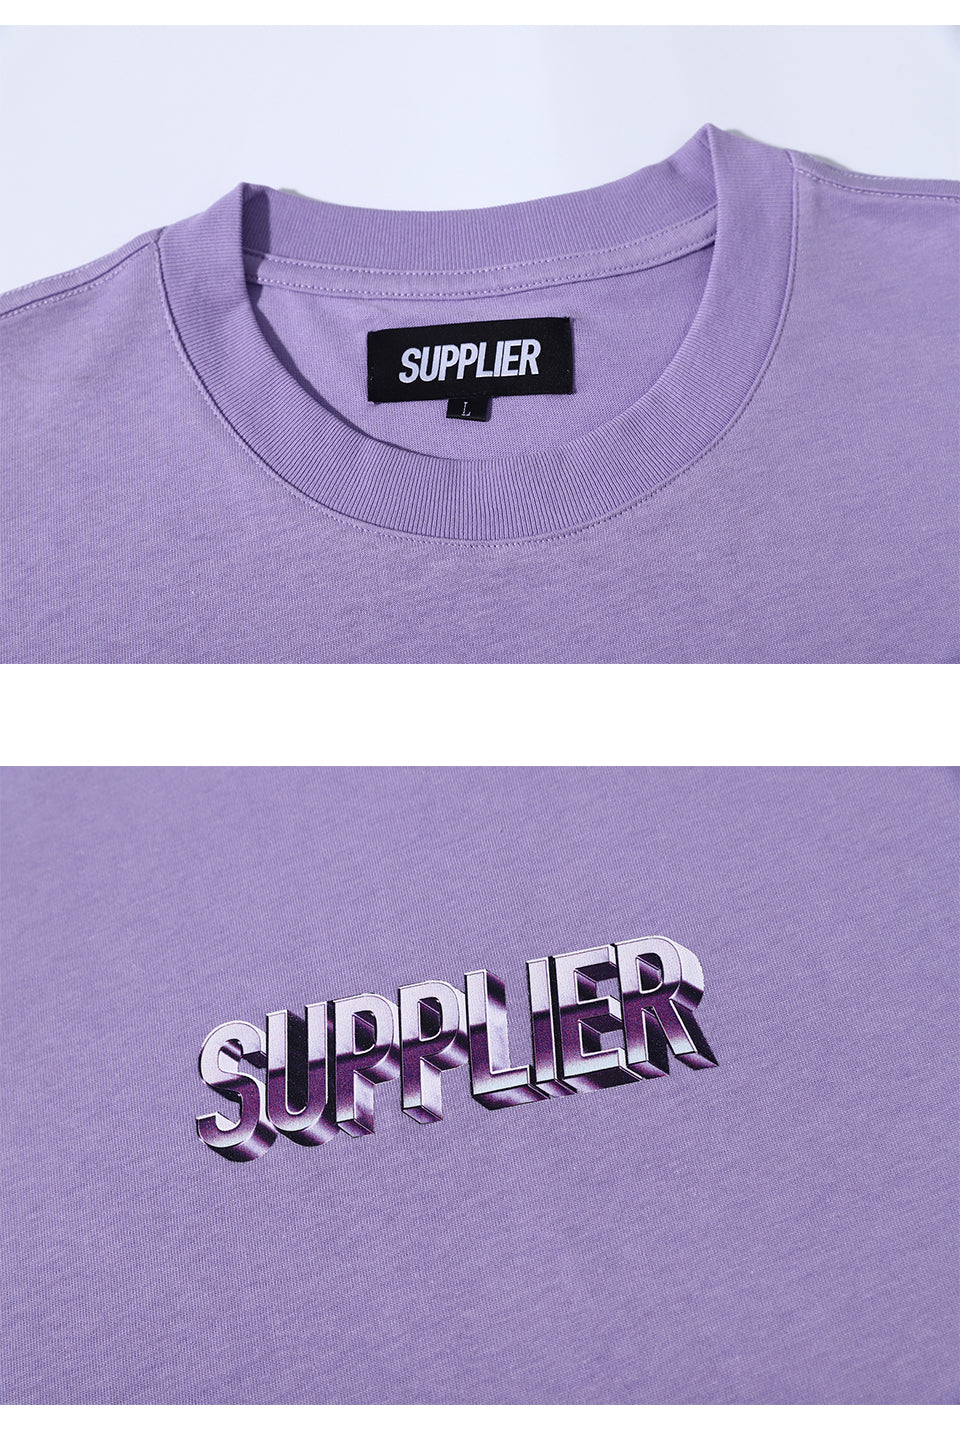 Supplier : Metal Logo Tee Purple